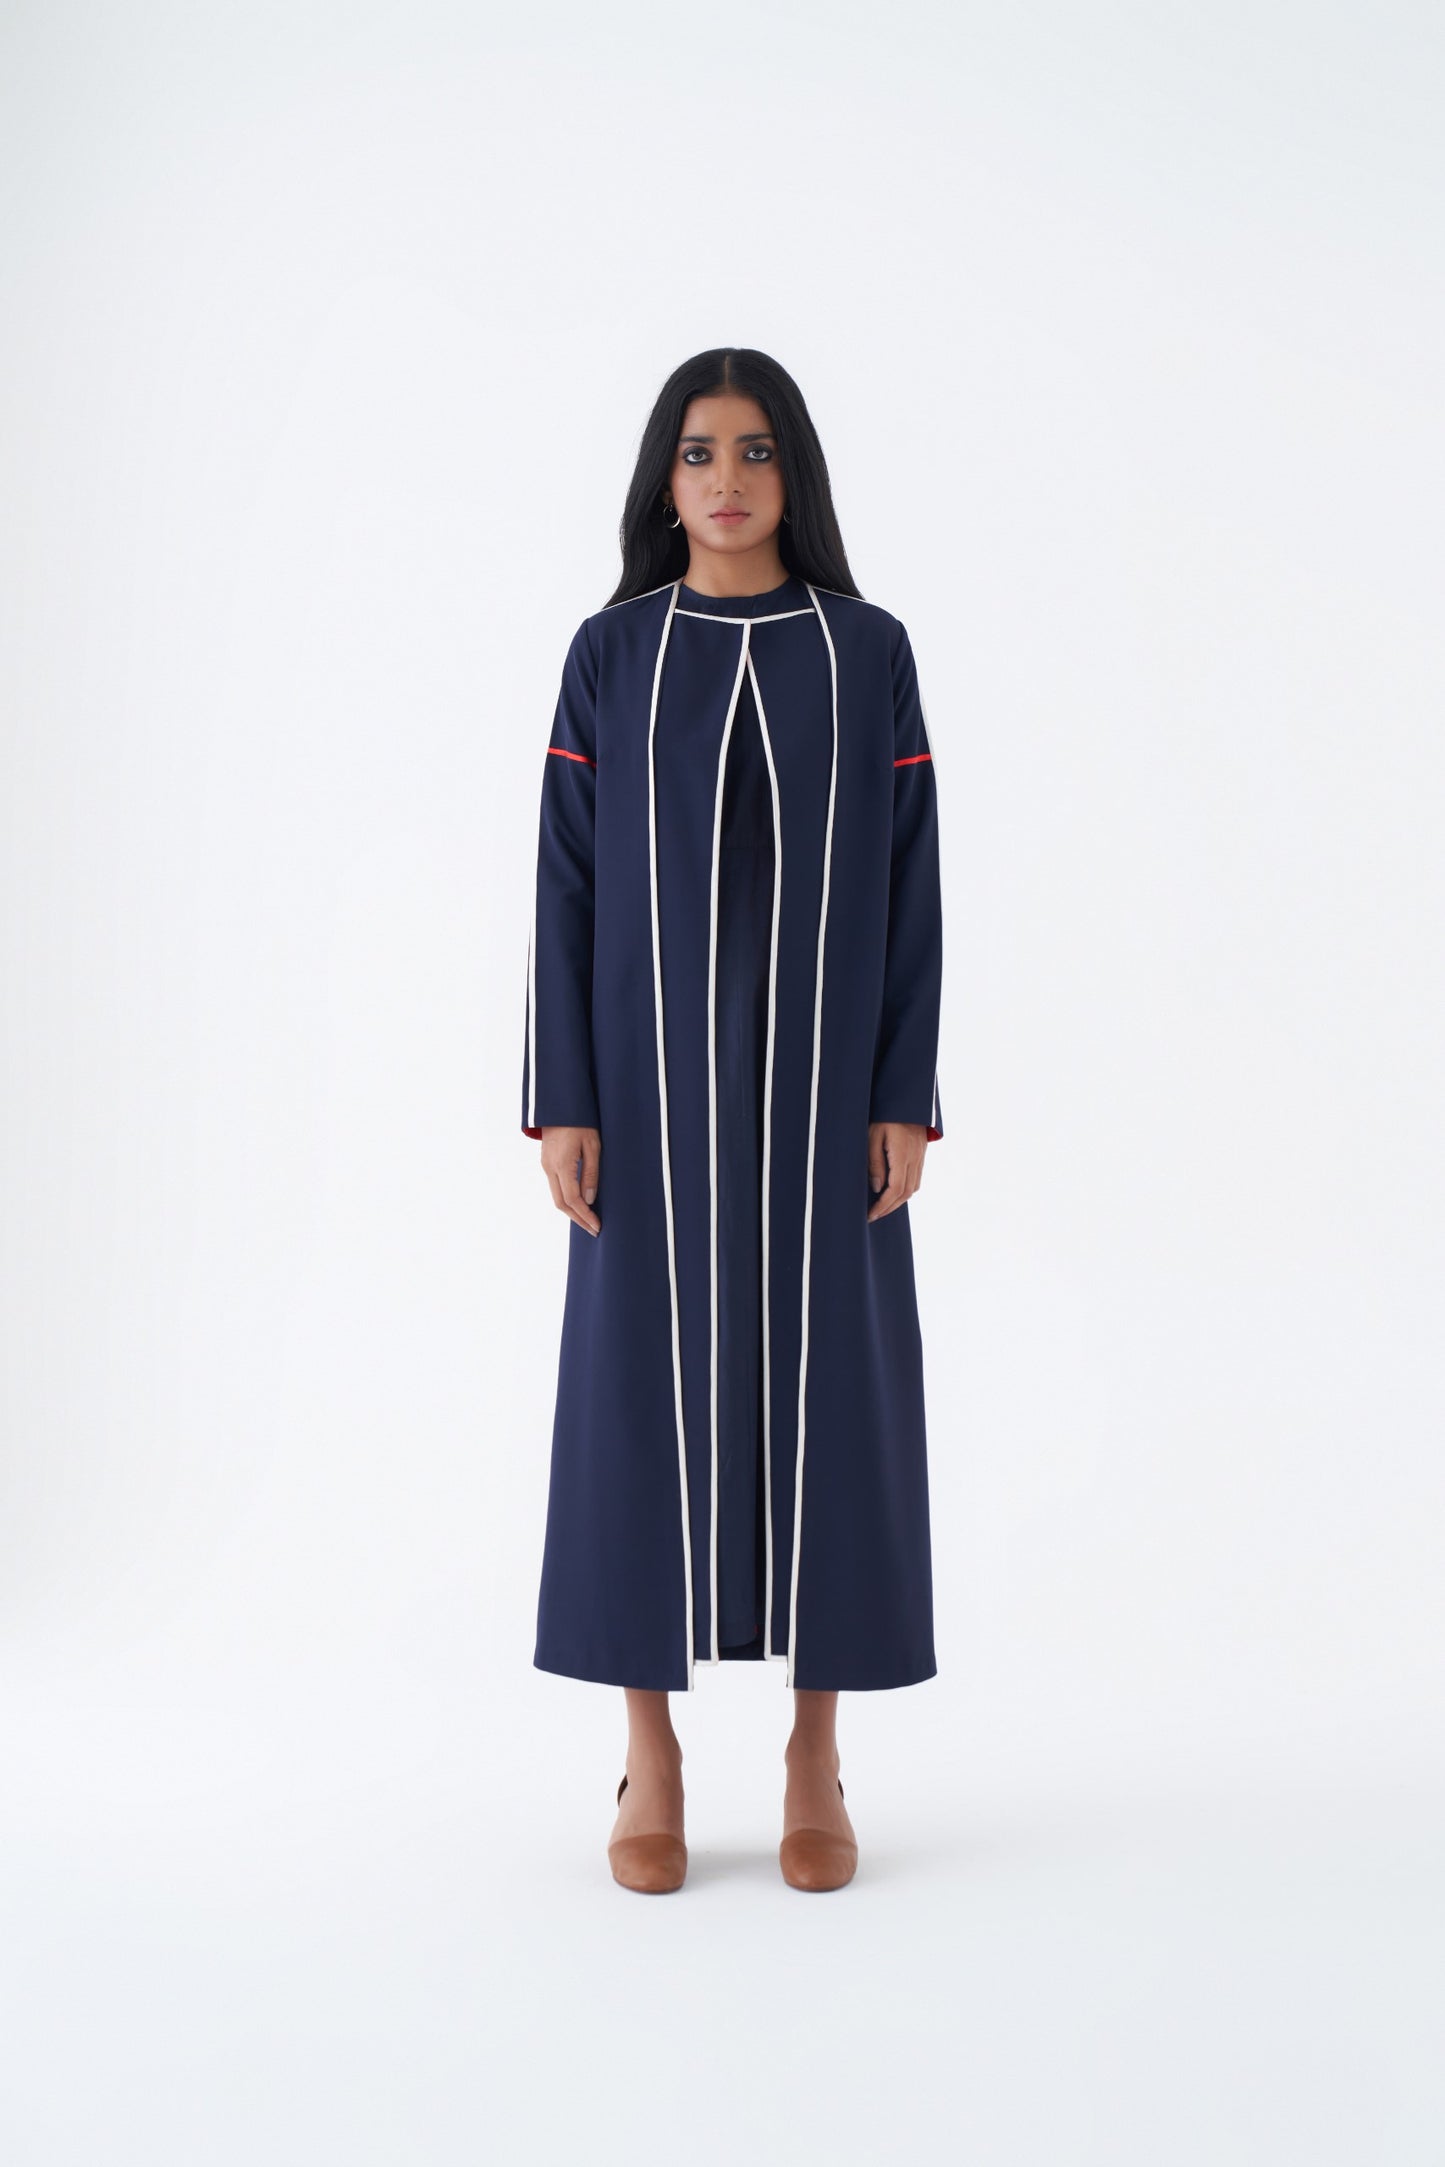 Sapphire Abaya with sleeves-24202